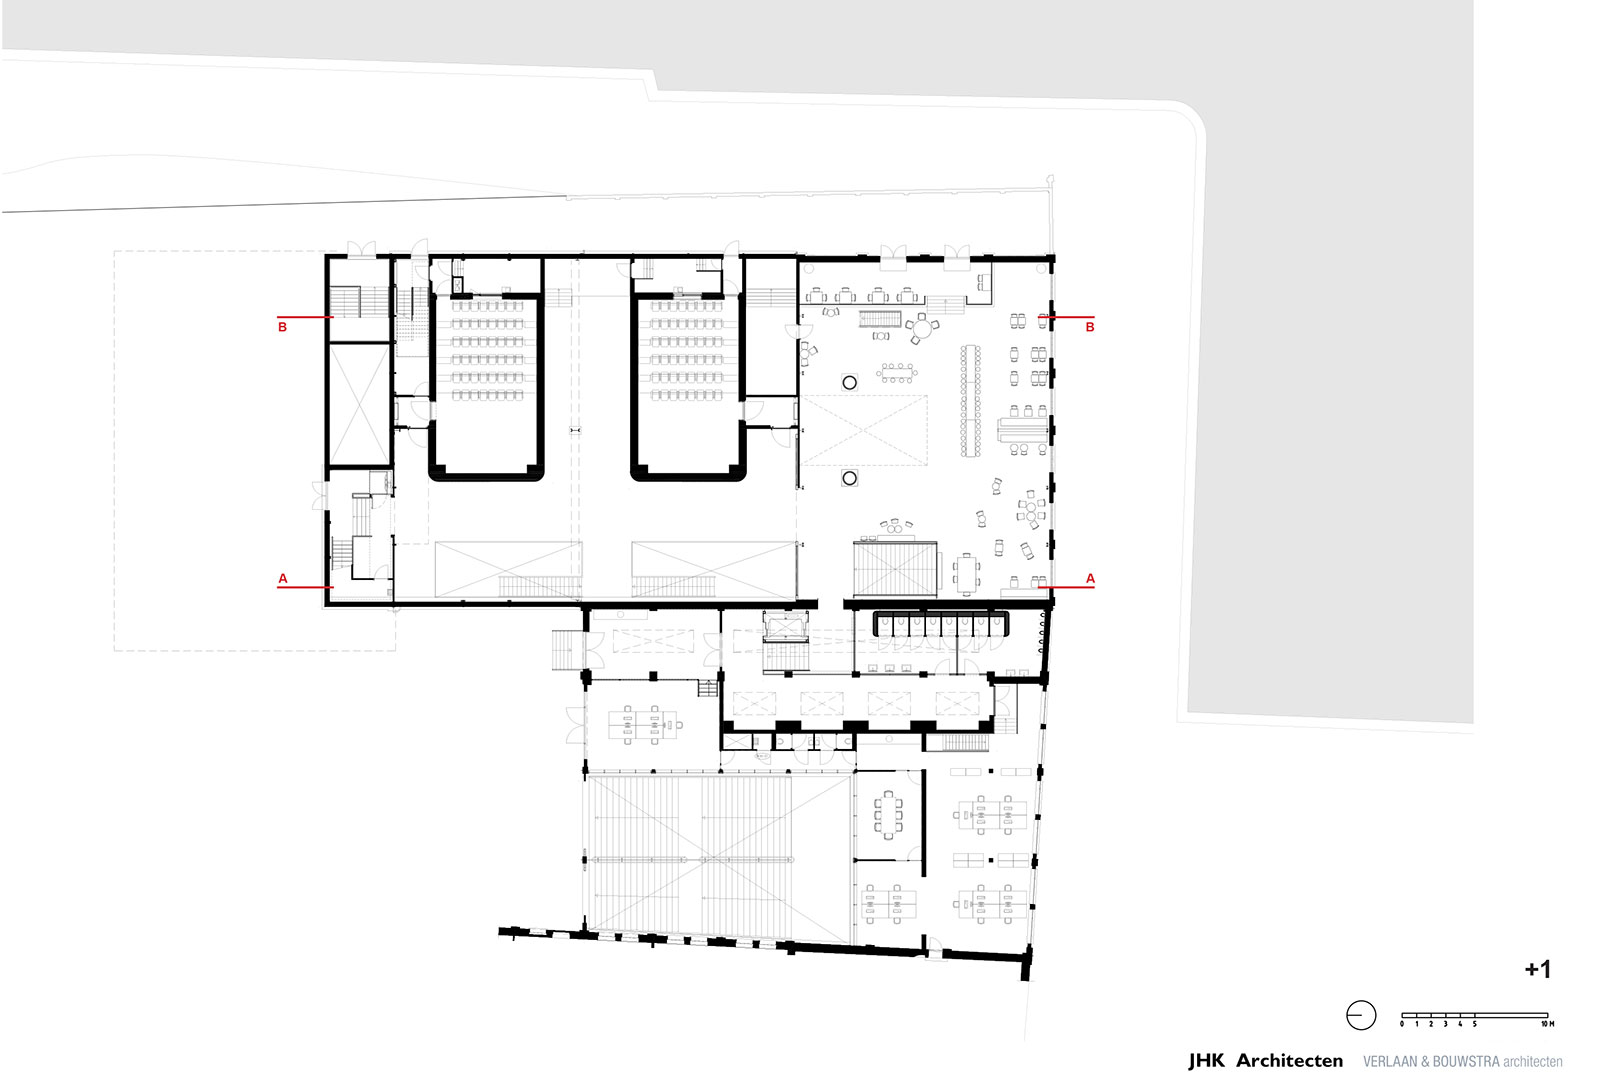 JHK Architecten Lumiere Cinema floorplans and sections 1